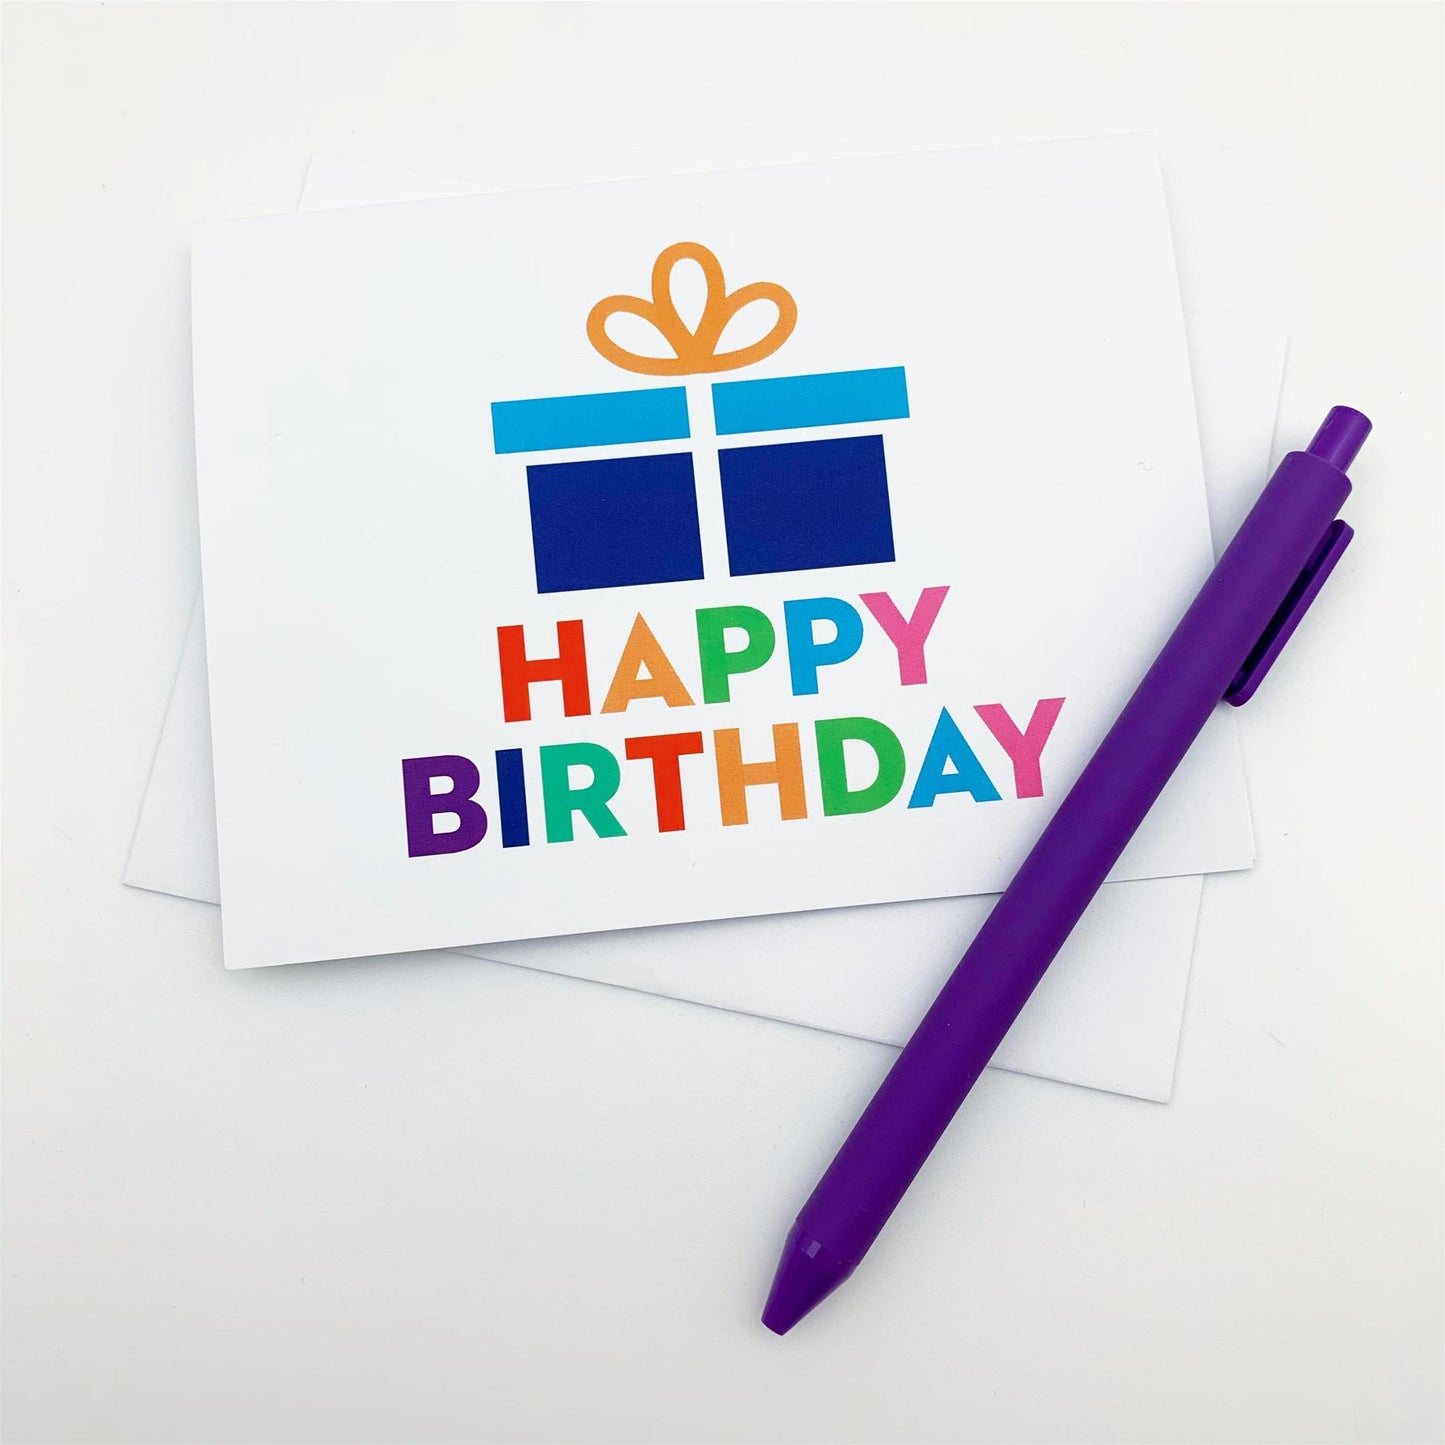 Greeting Card - "Happy Birthday" Present